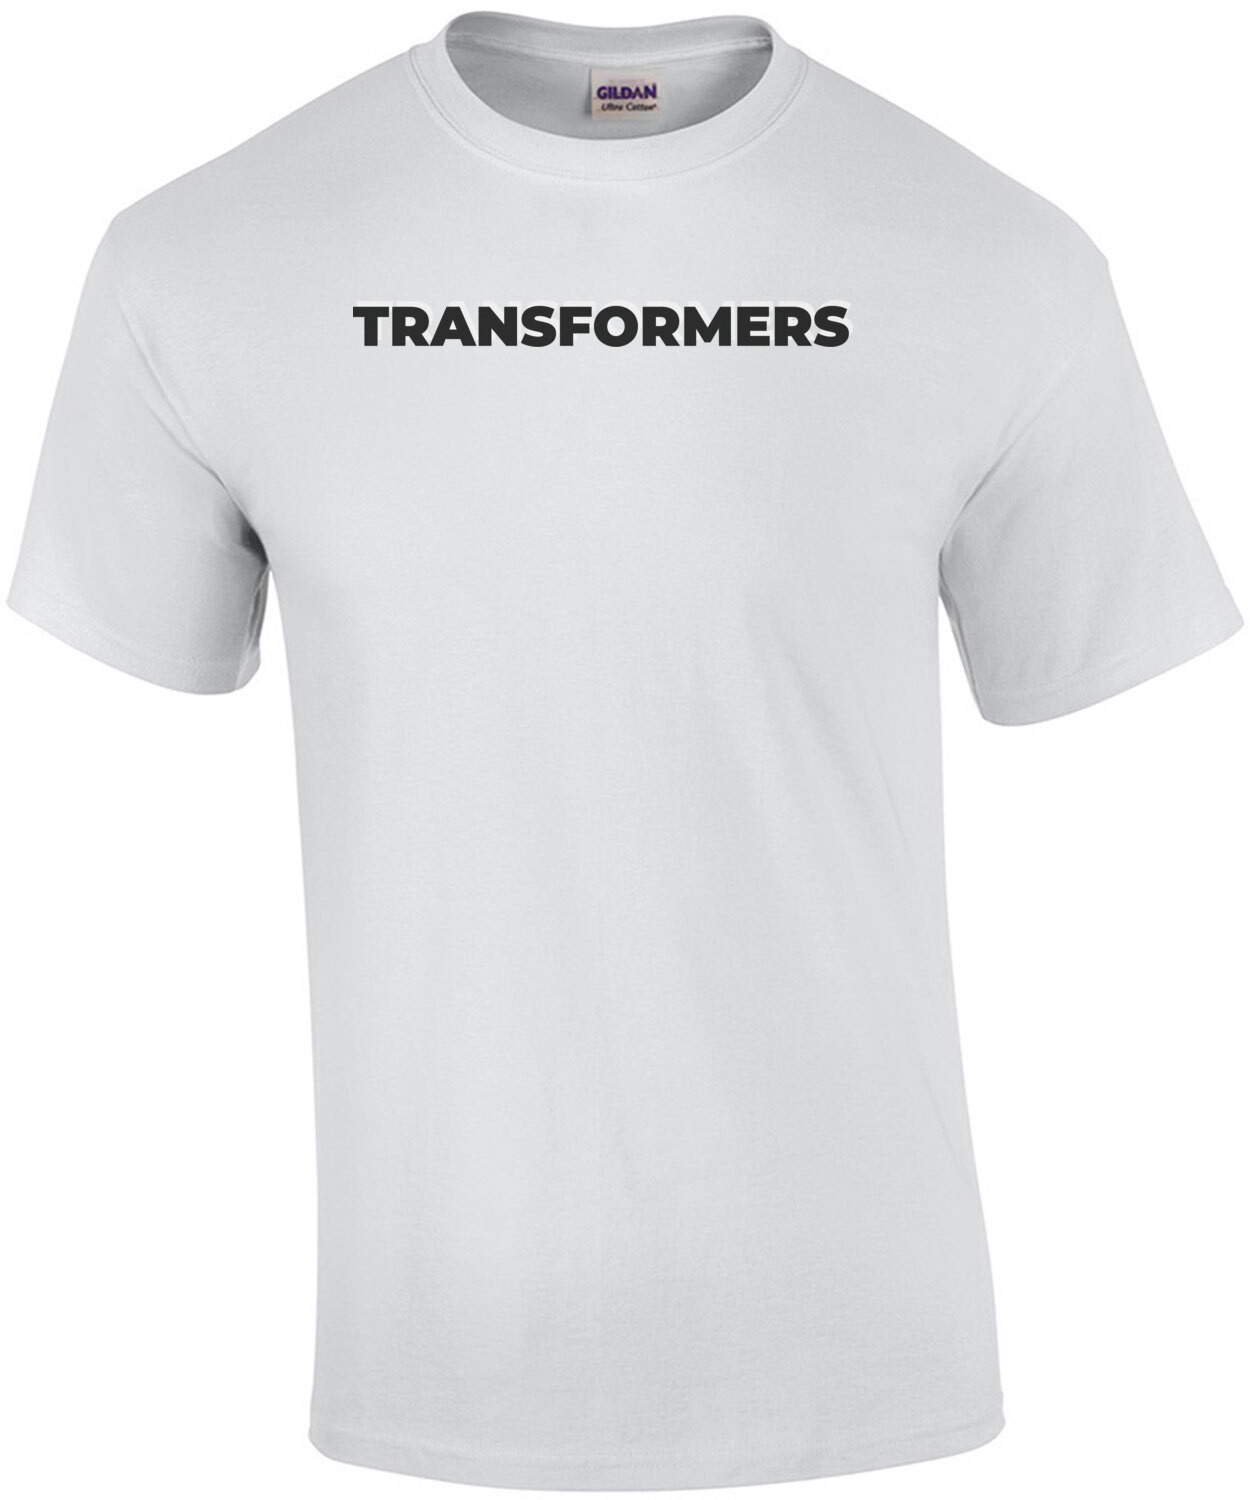 Transformers 80's T-Shirt